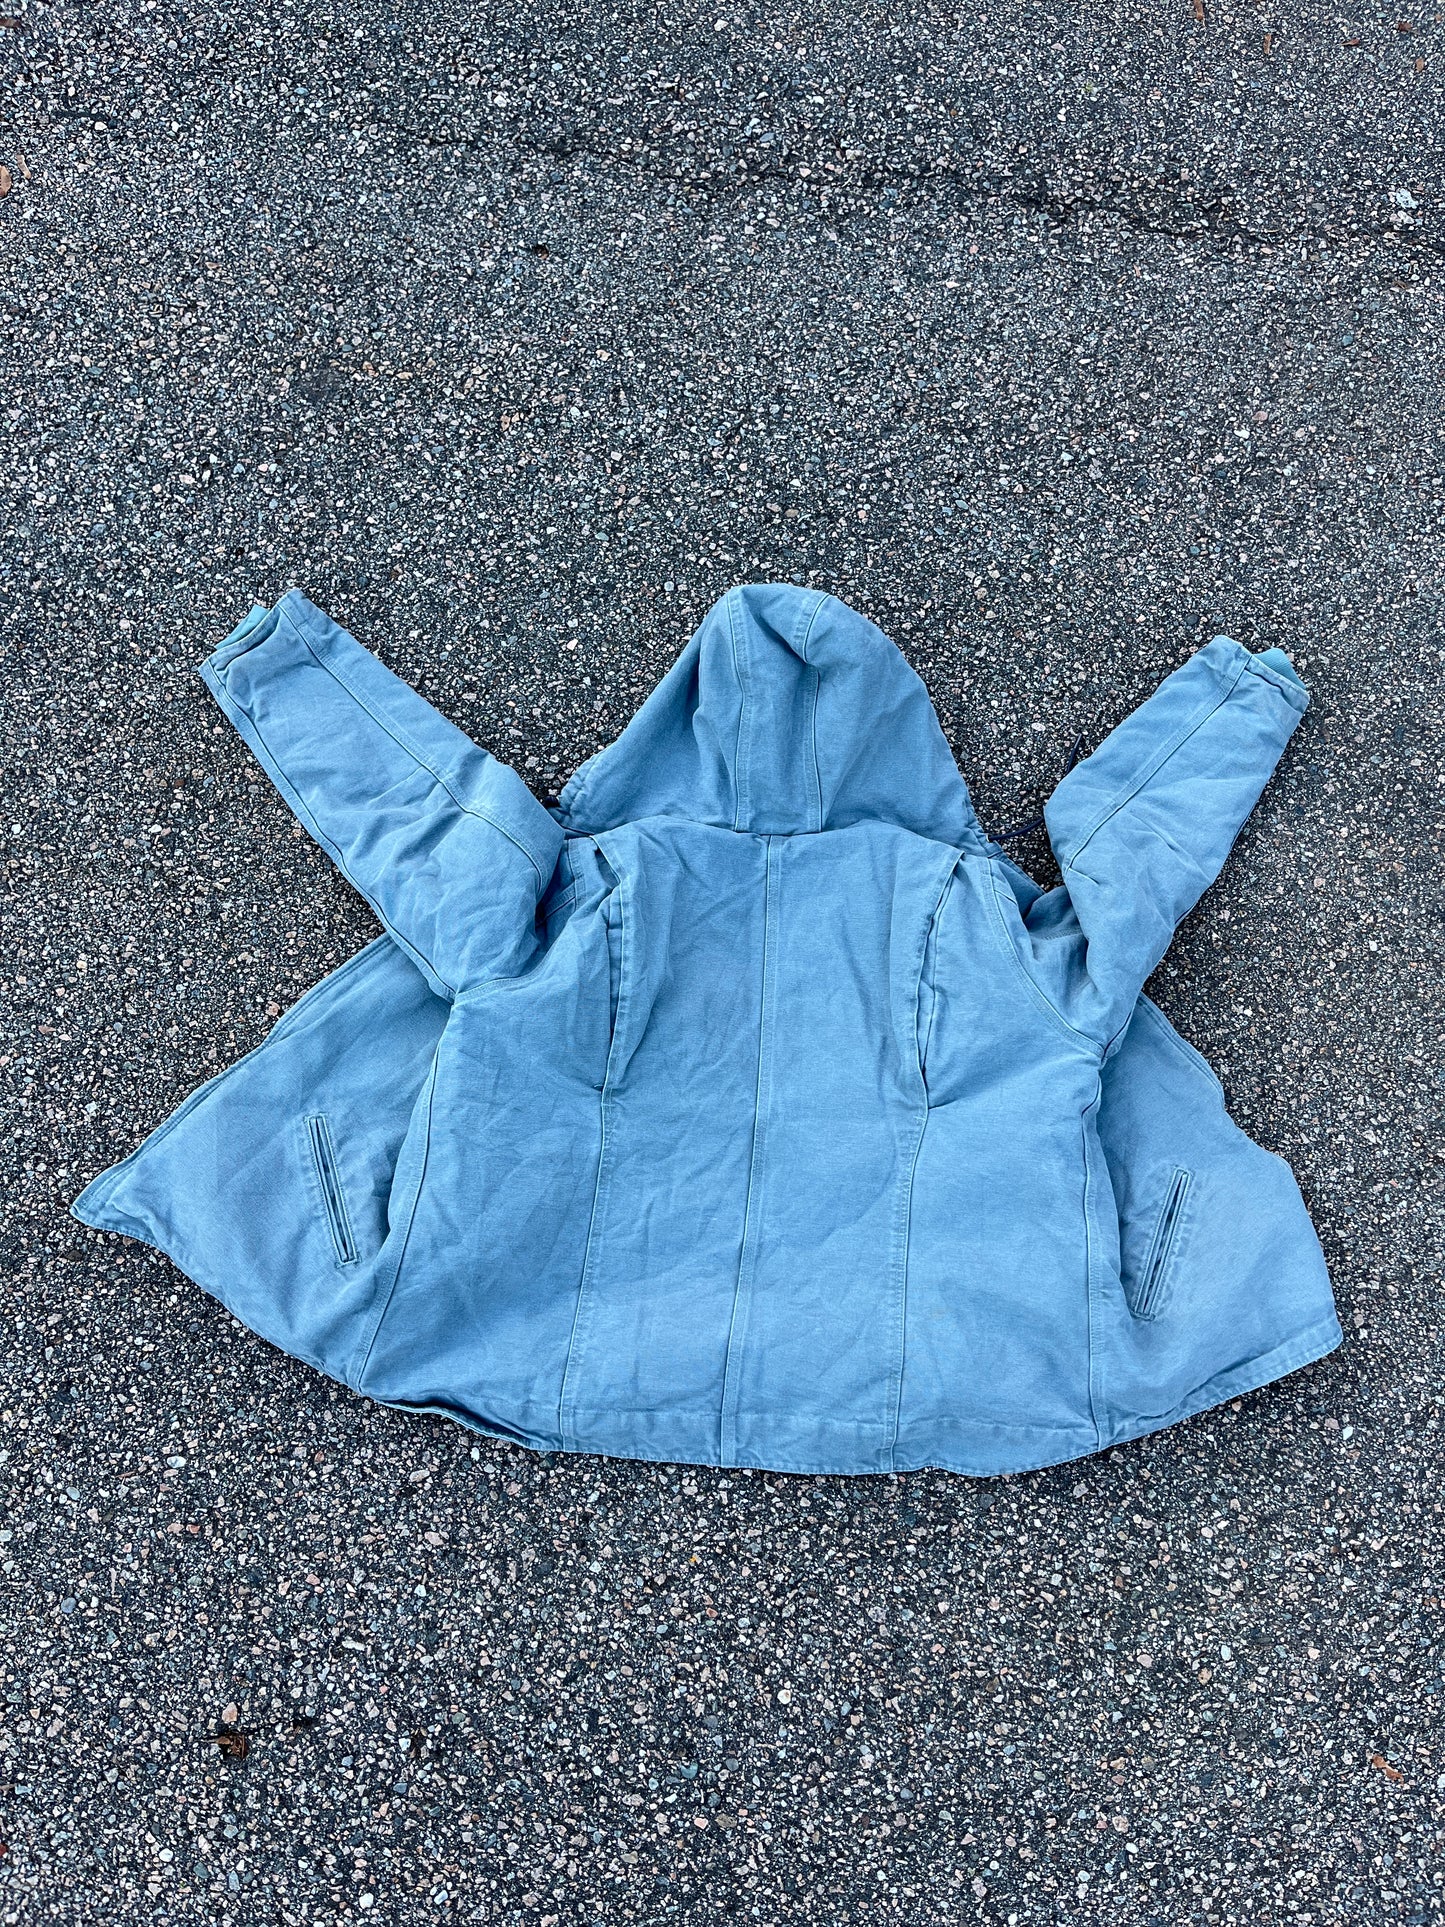 Faded Sky Blue Carhartt Sherpa Lined Jacket - Large